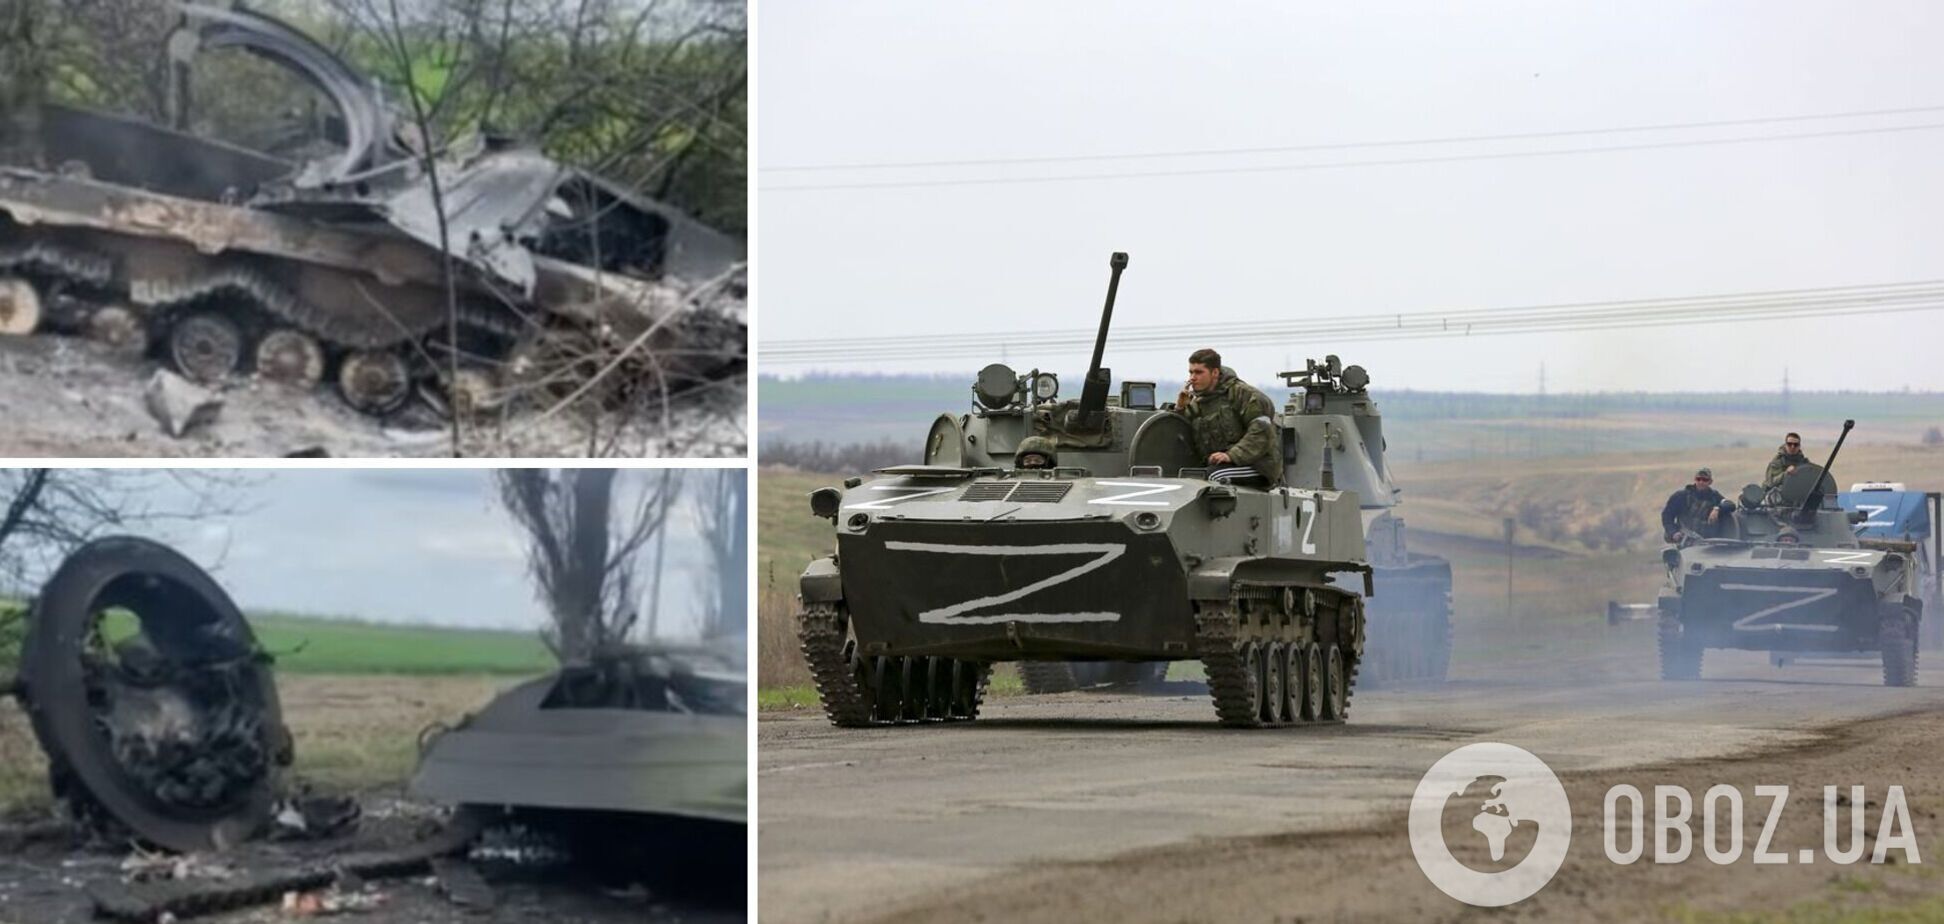 Украинские десантники 'зажарили' вражескую технику вместе с оккупантами. Видео